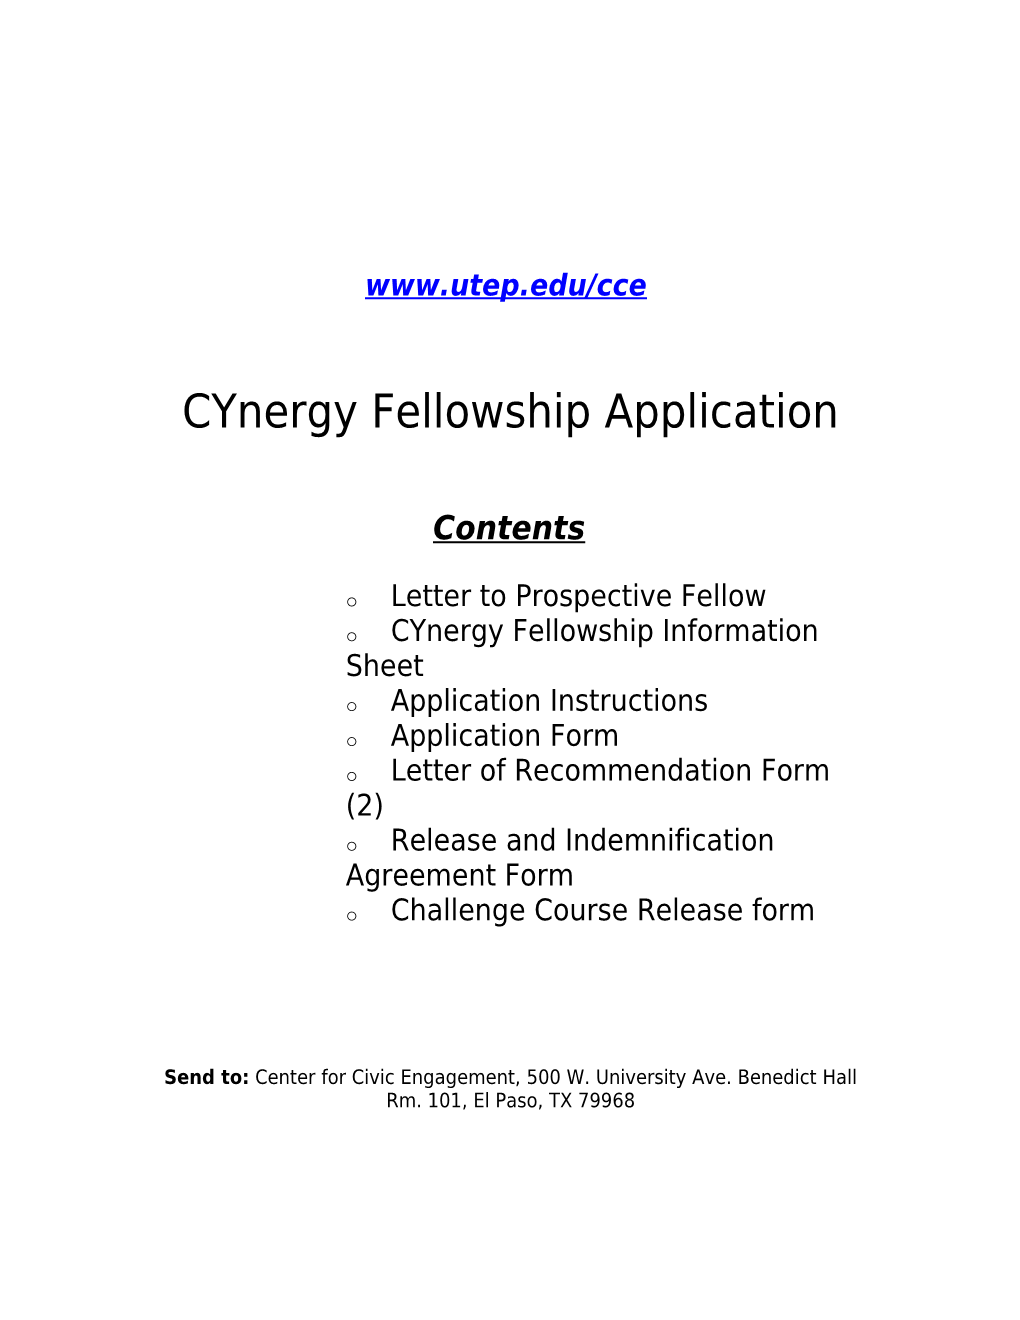 Cynergy Fellowship Application